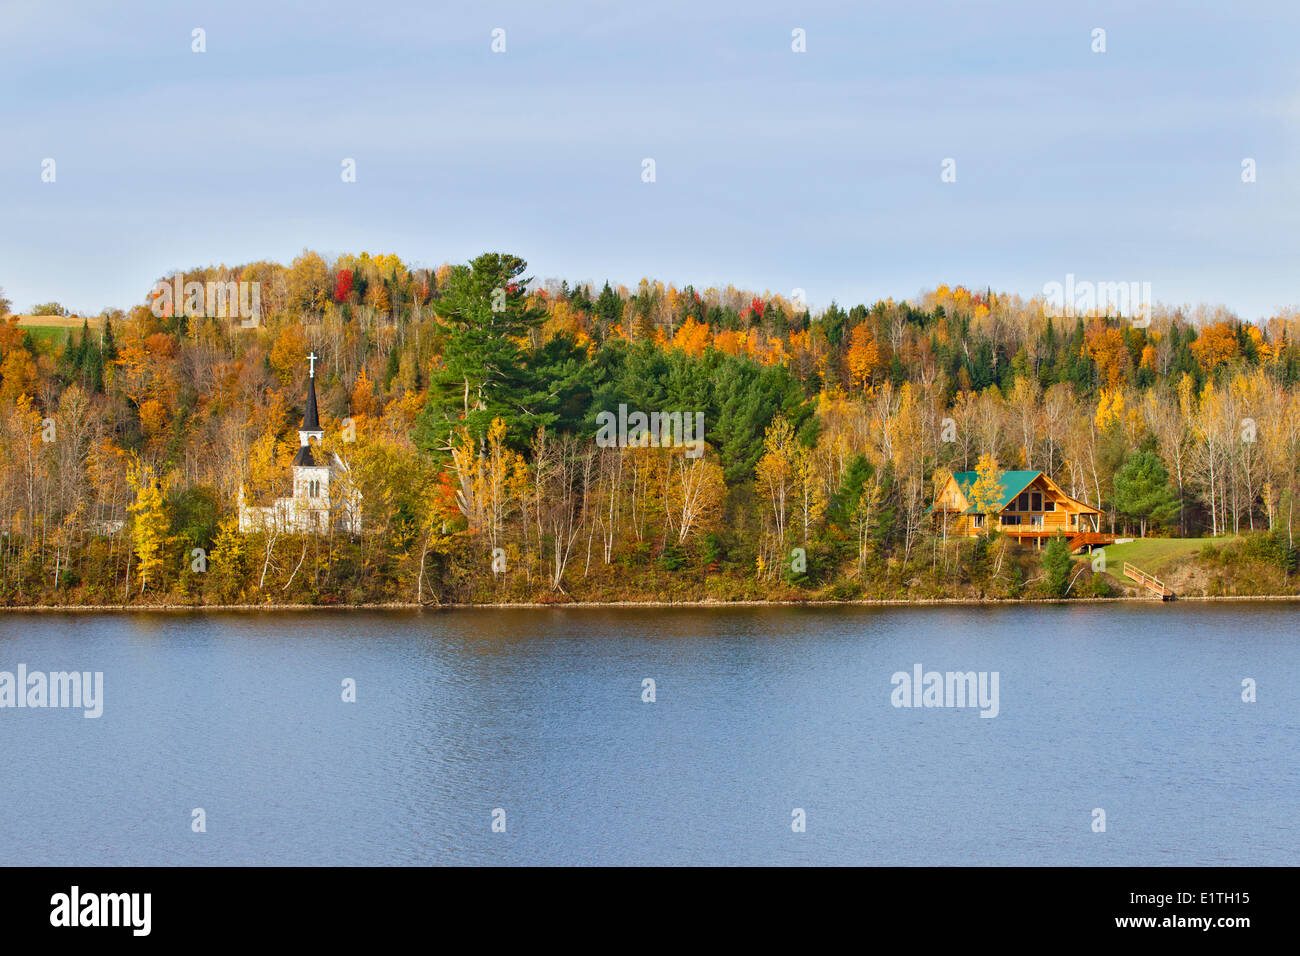 Log house and church, Upper Kent, Saint John River, New Brunswick, Canada Stock Photo